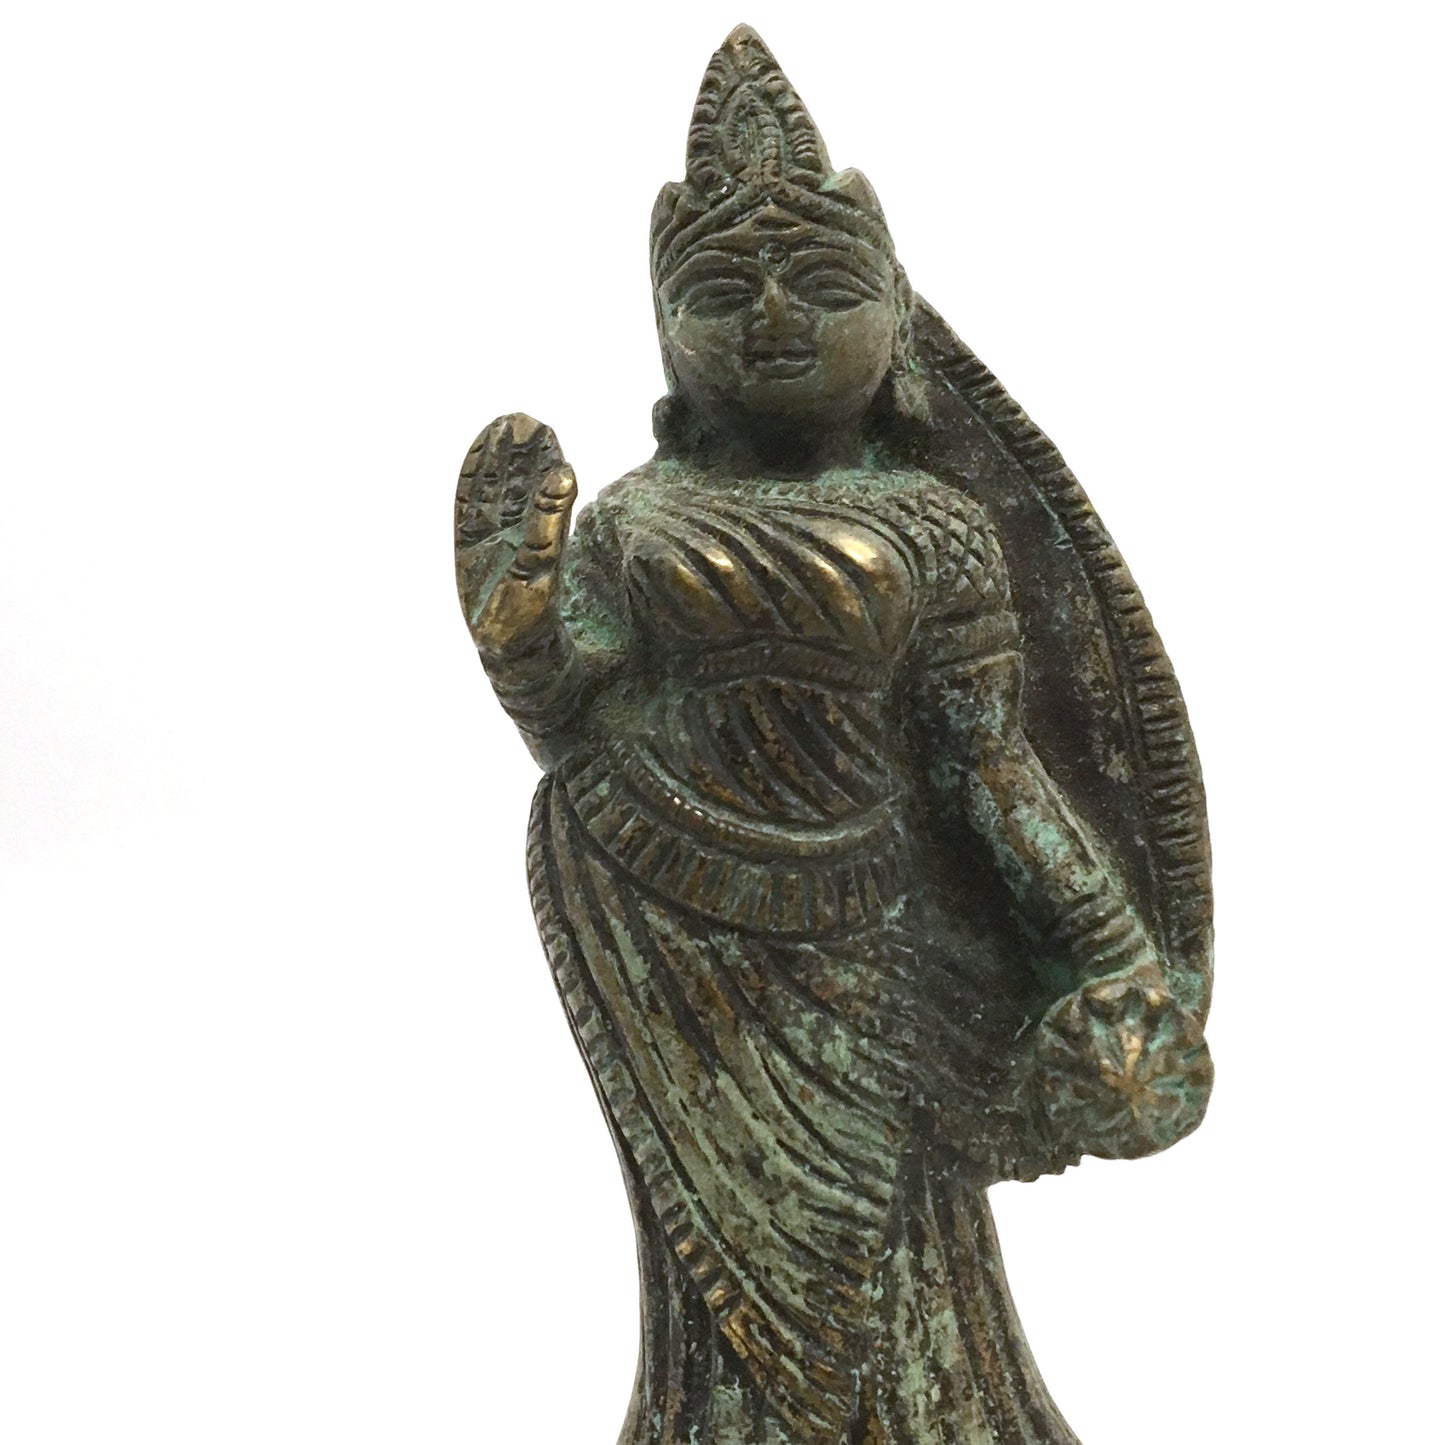 Antique Brass 2-Hand Lakshmi Laxsmi India Goddess of Prosperity Statue Figure 6"